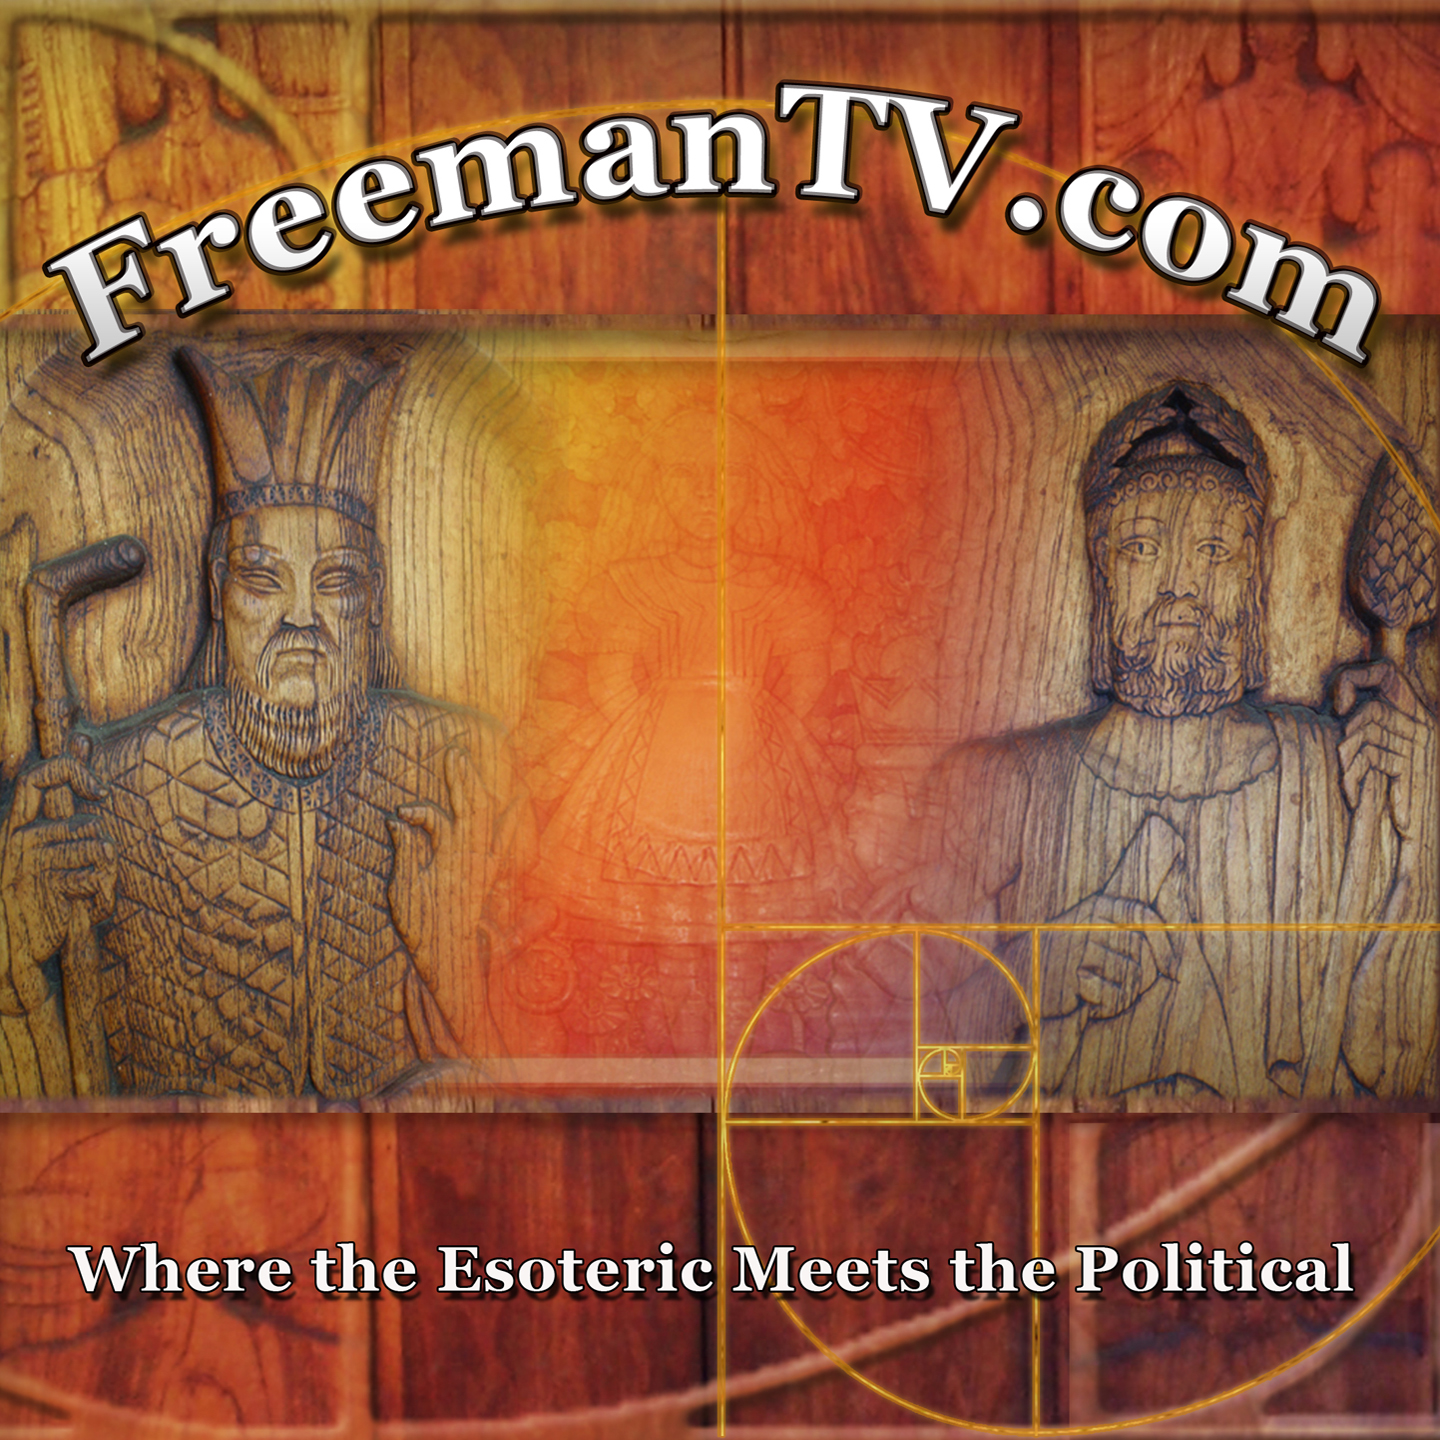 FreemanTV.com